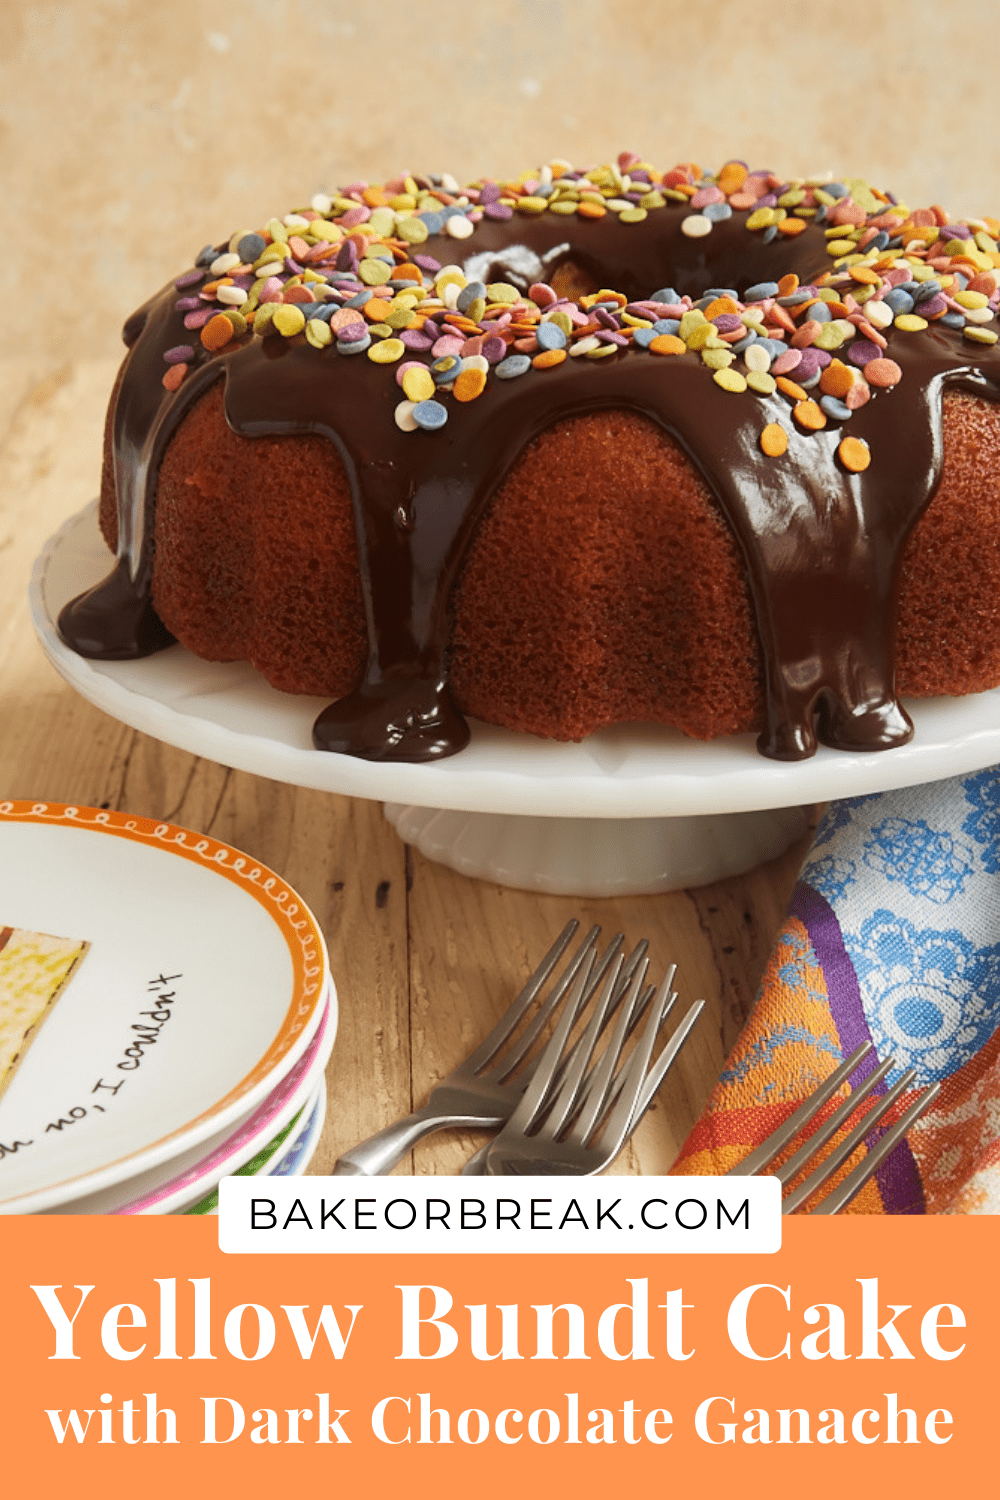 Yellow Bundt Cake with Dark Chocolate Ganache bakeorbreak.com